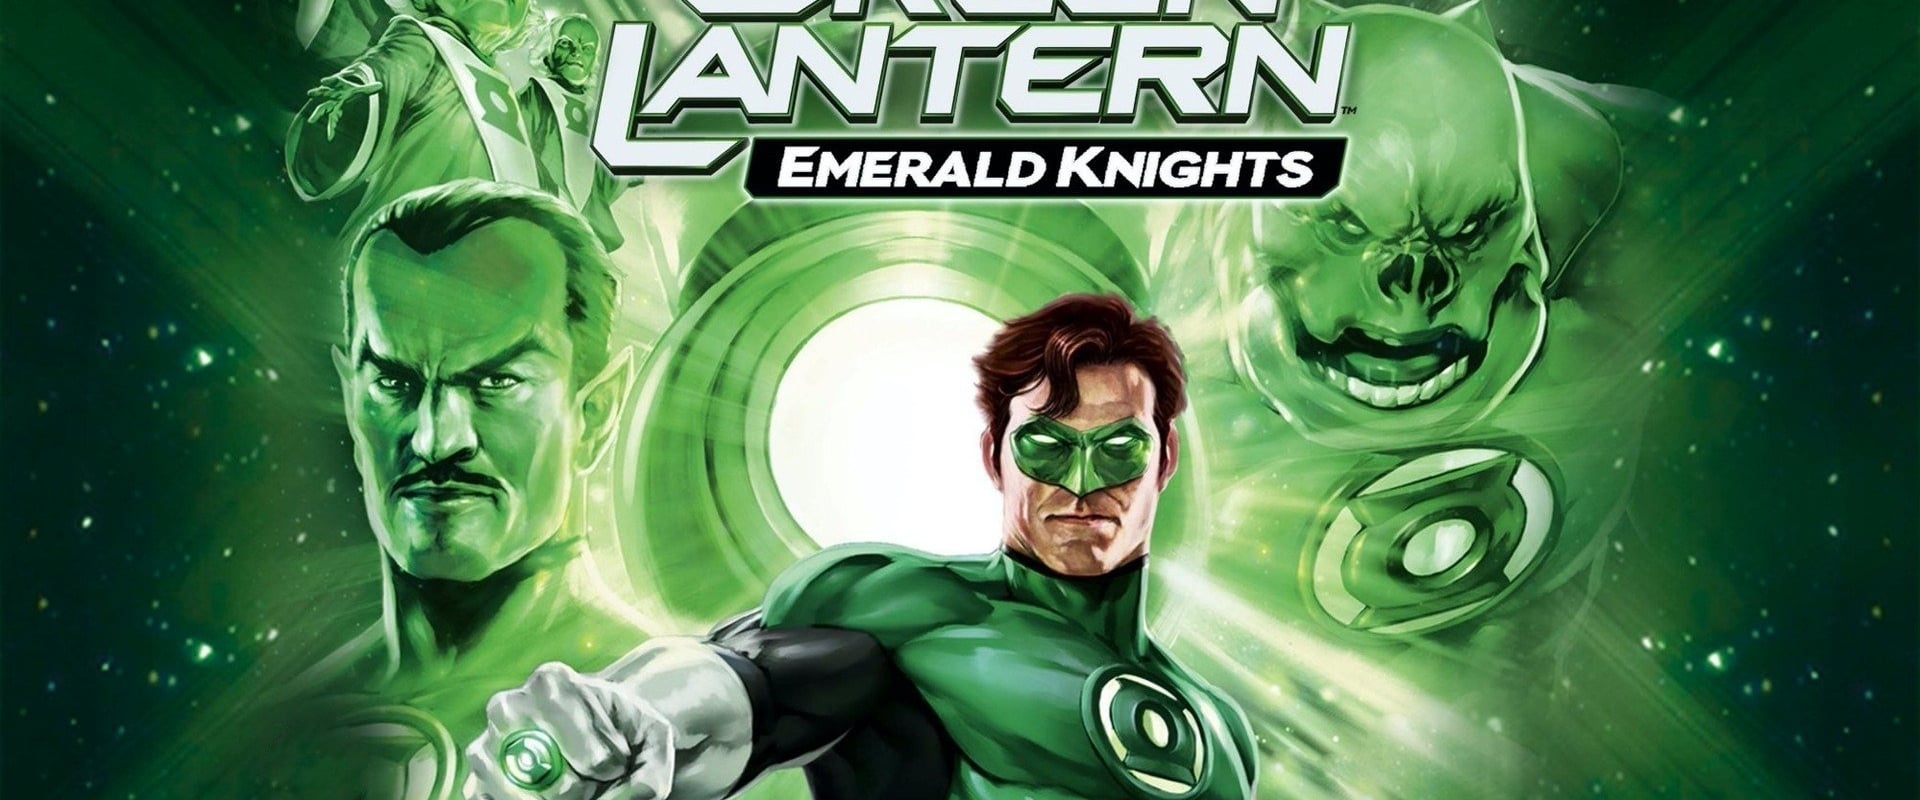 Lanterna Verde: Cavaleiros Esmeralda